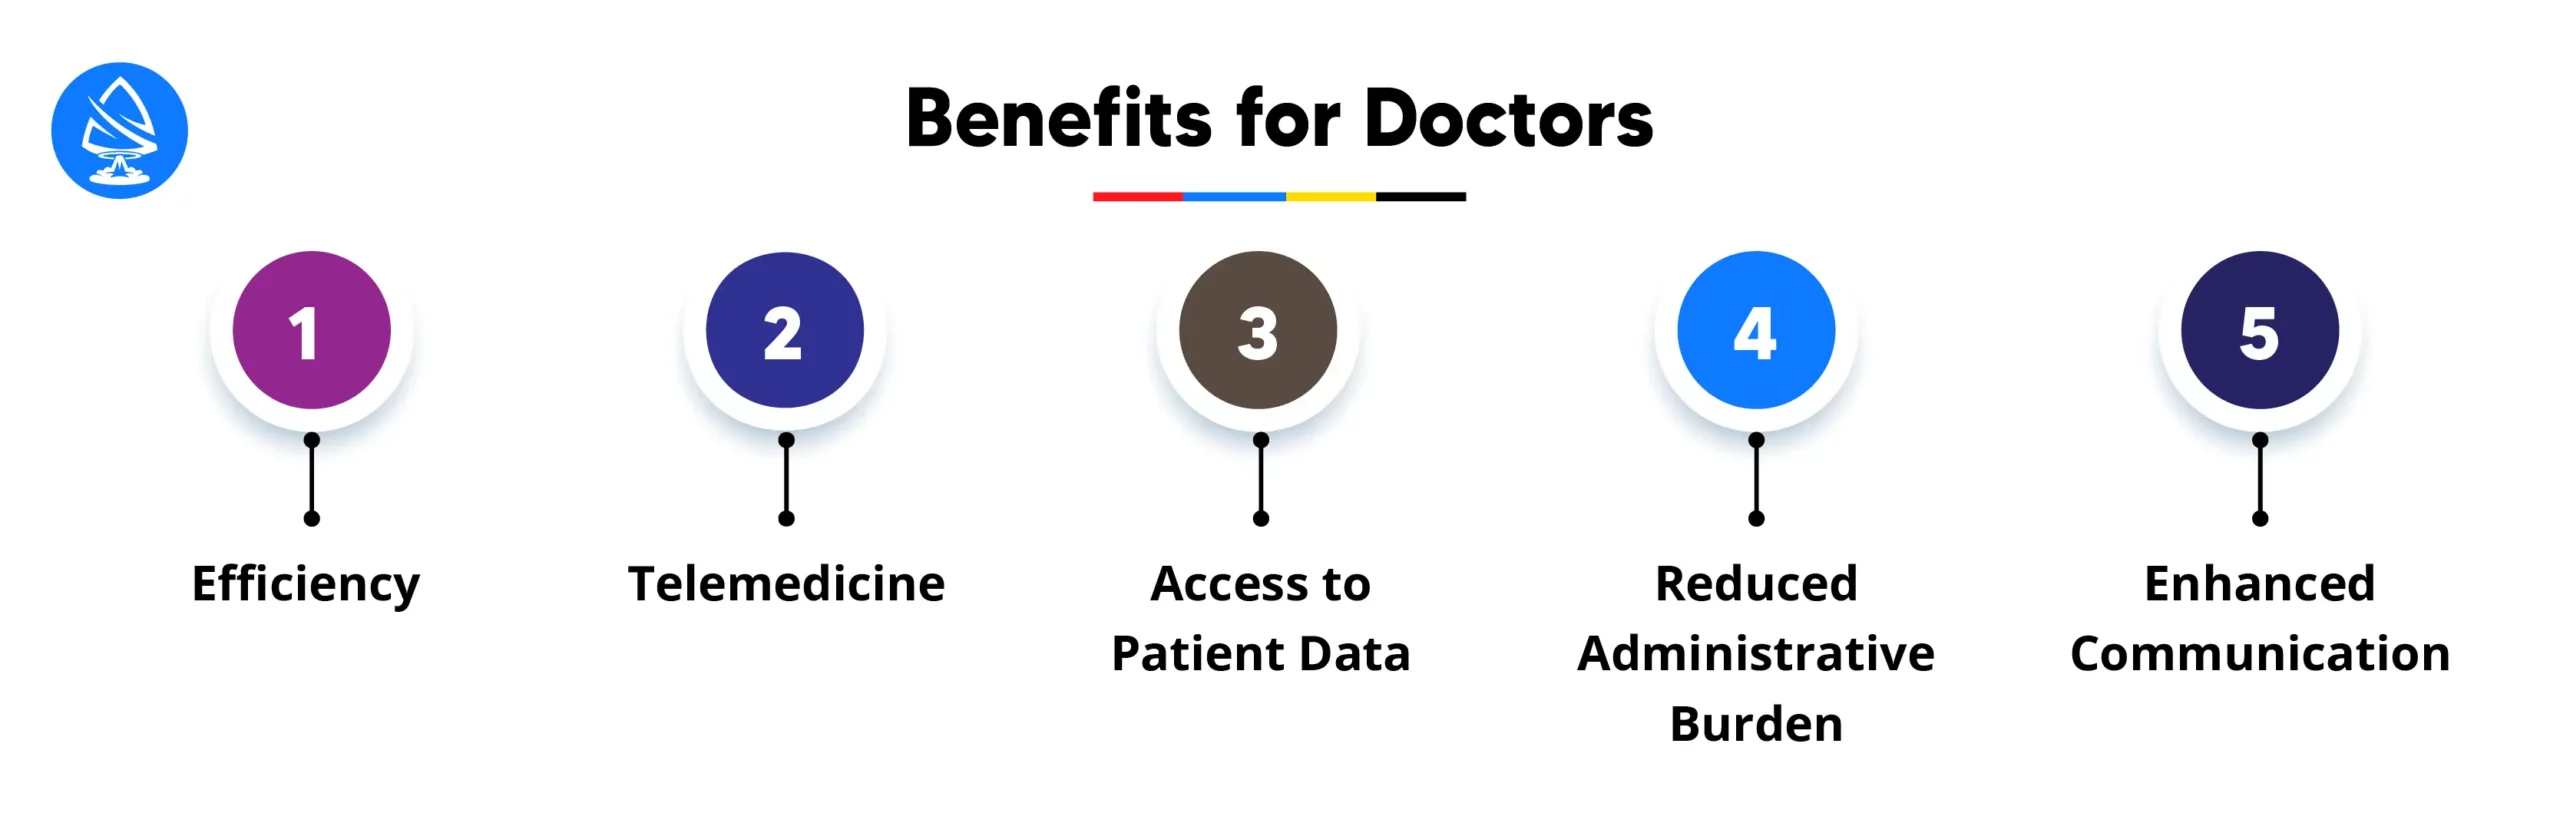 Benefits for Doctors